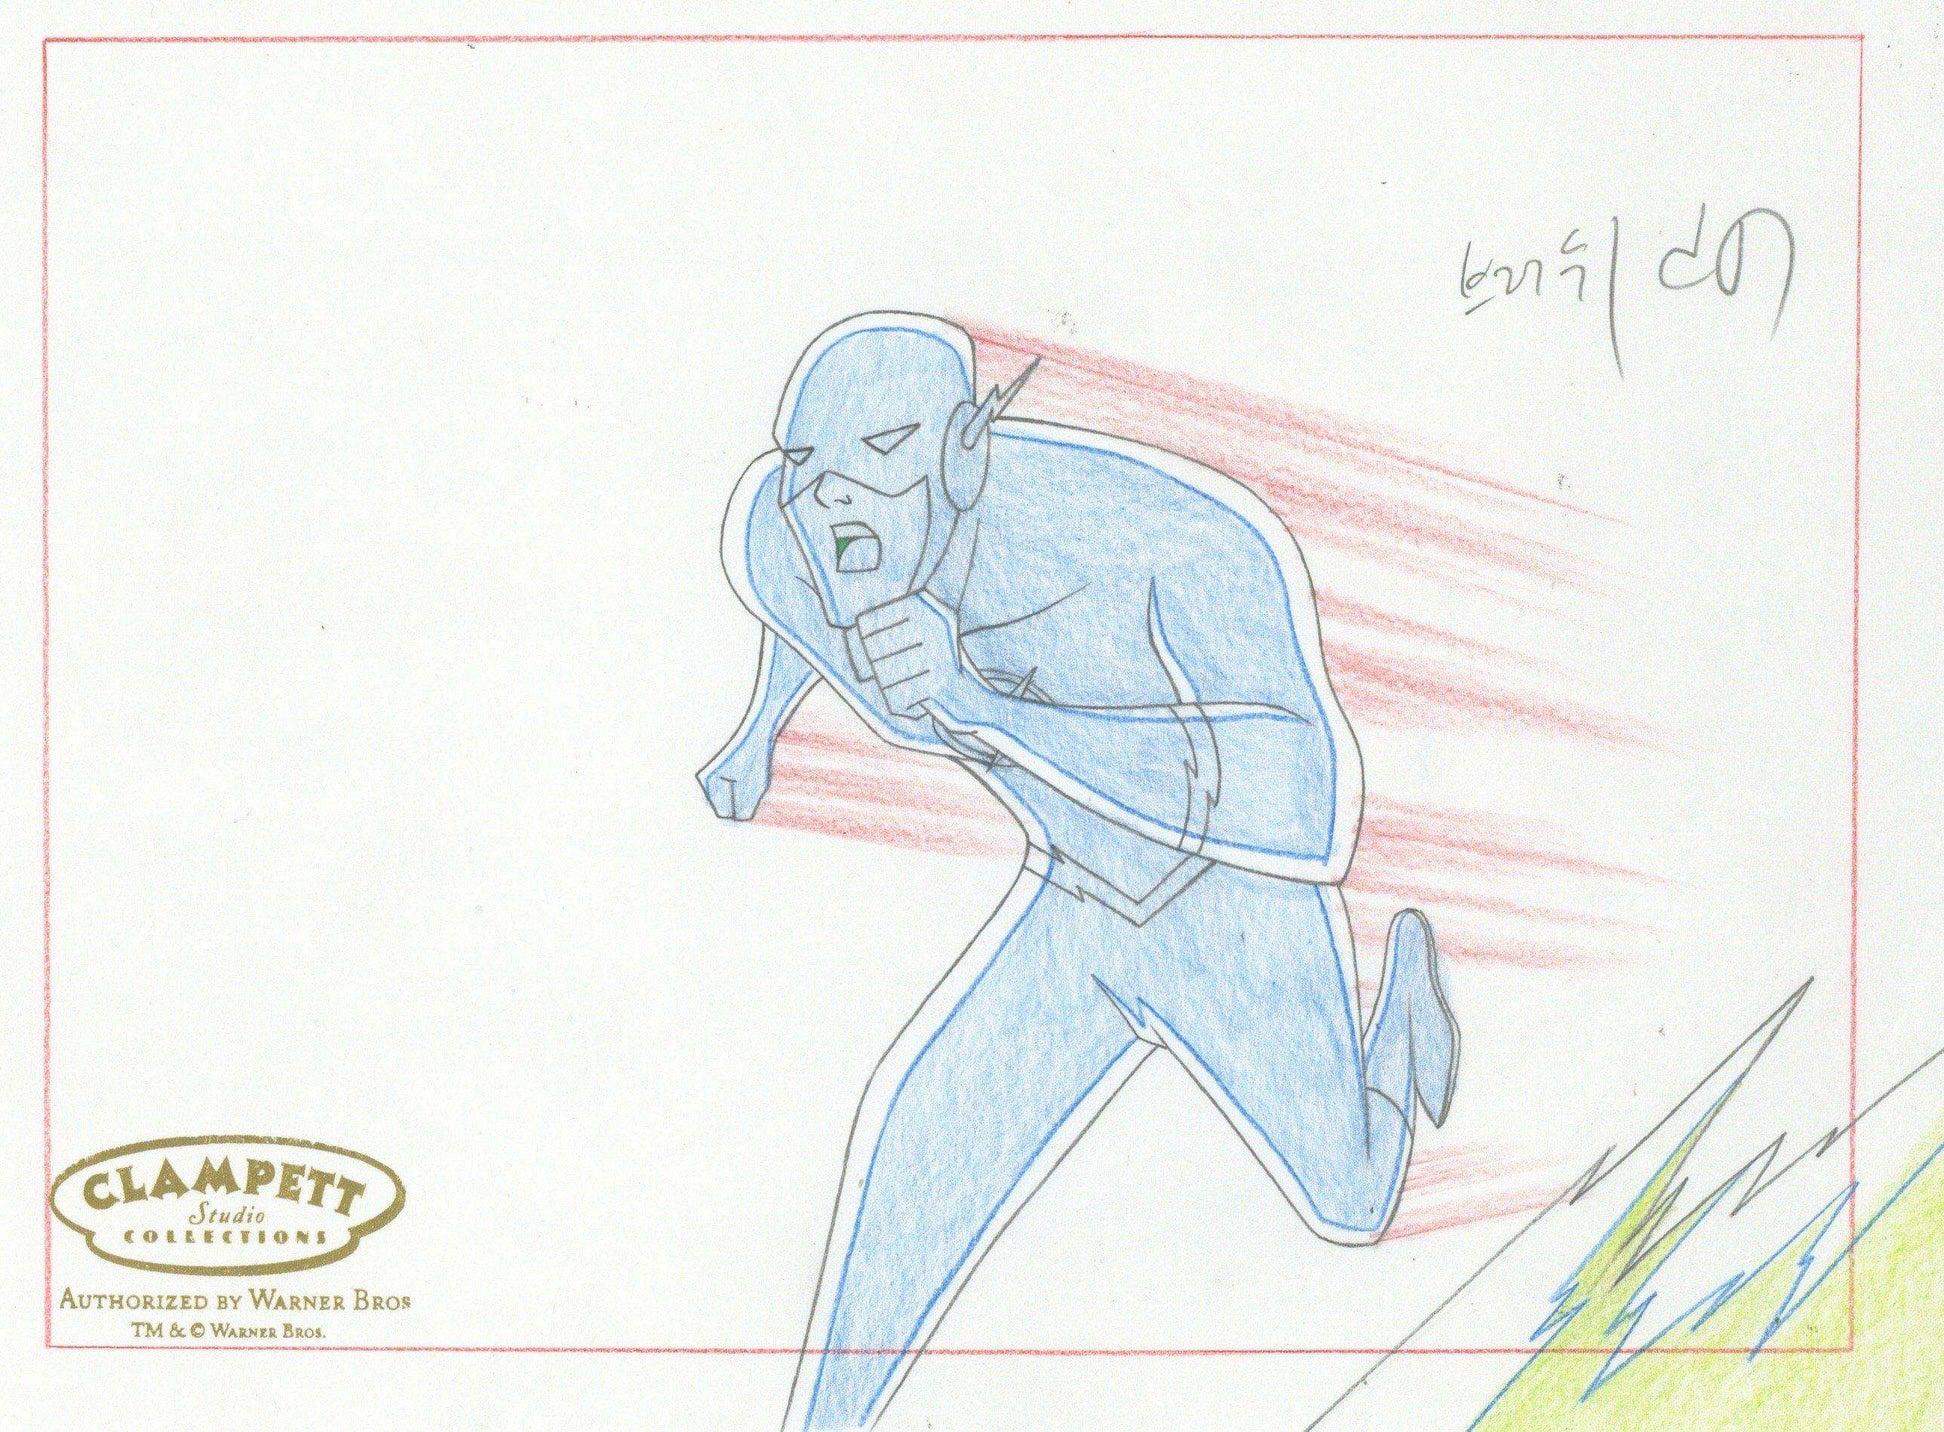 Justice League Original Production Drawing: The Flash - Art by DC Comics Studio Artists